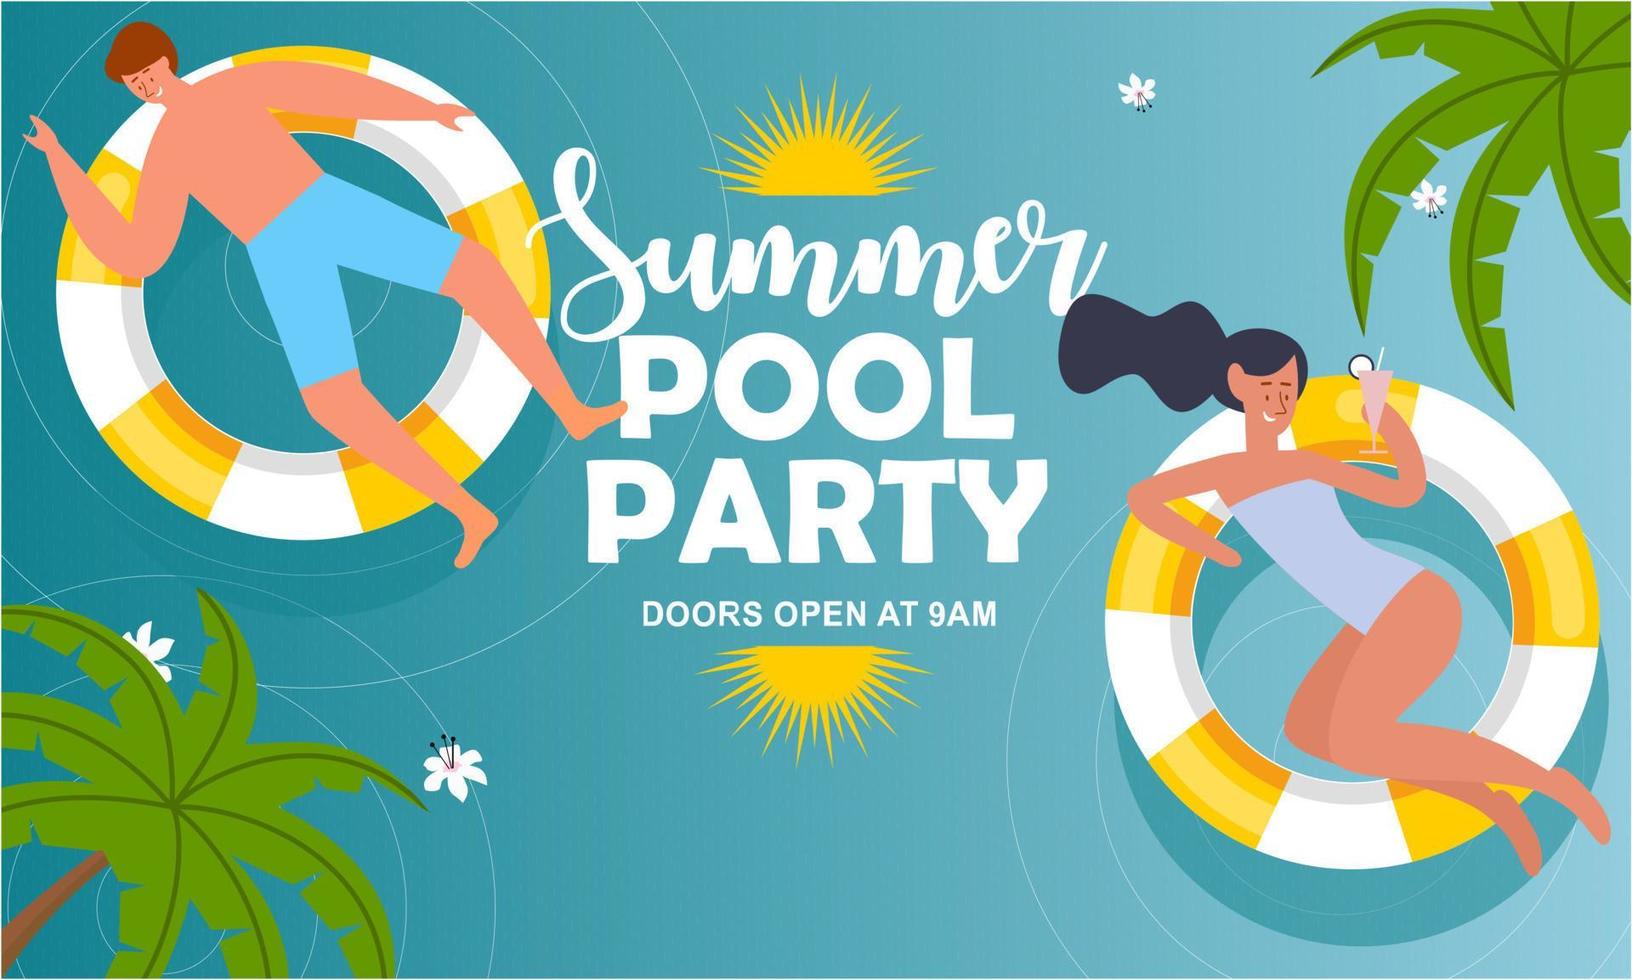 Sommer- Schwimmbad Party Einladung Illustration vektor